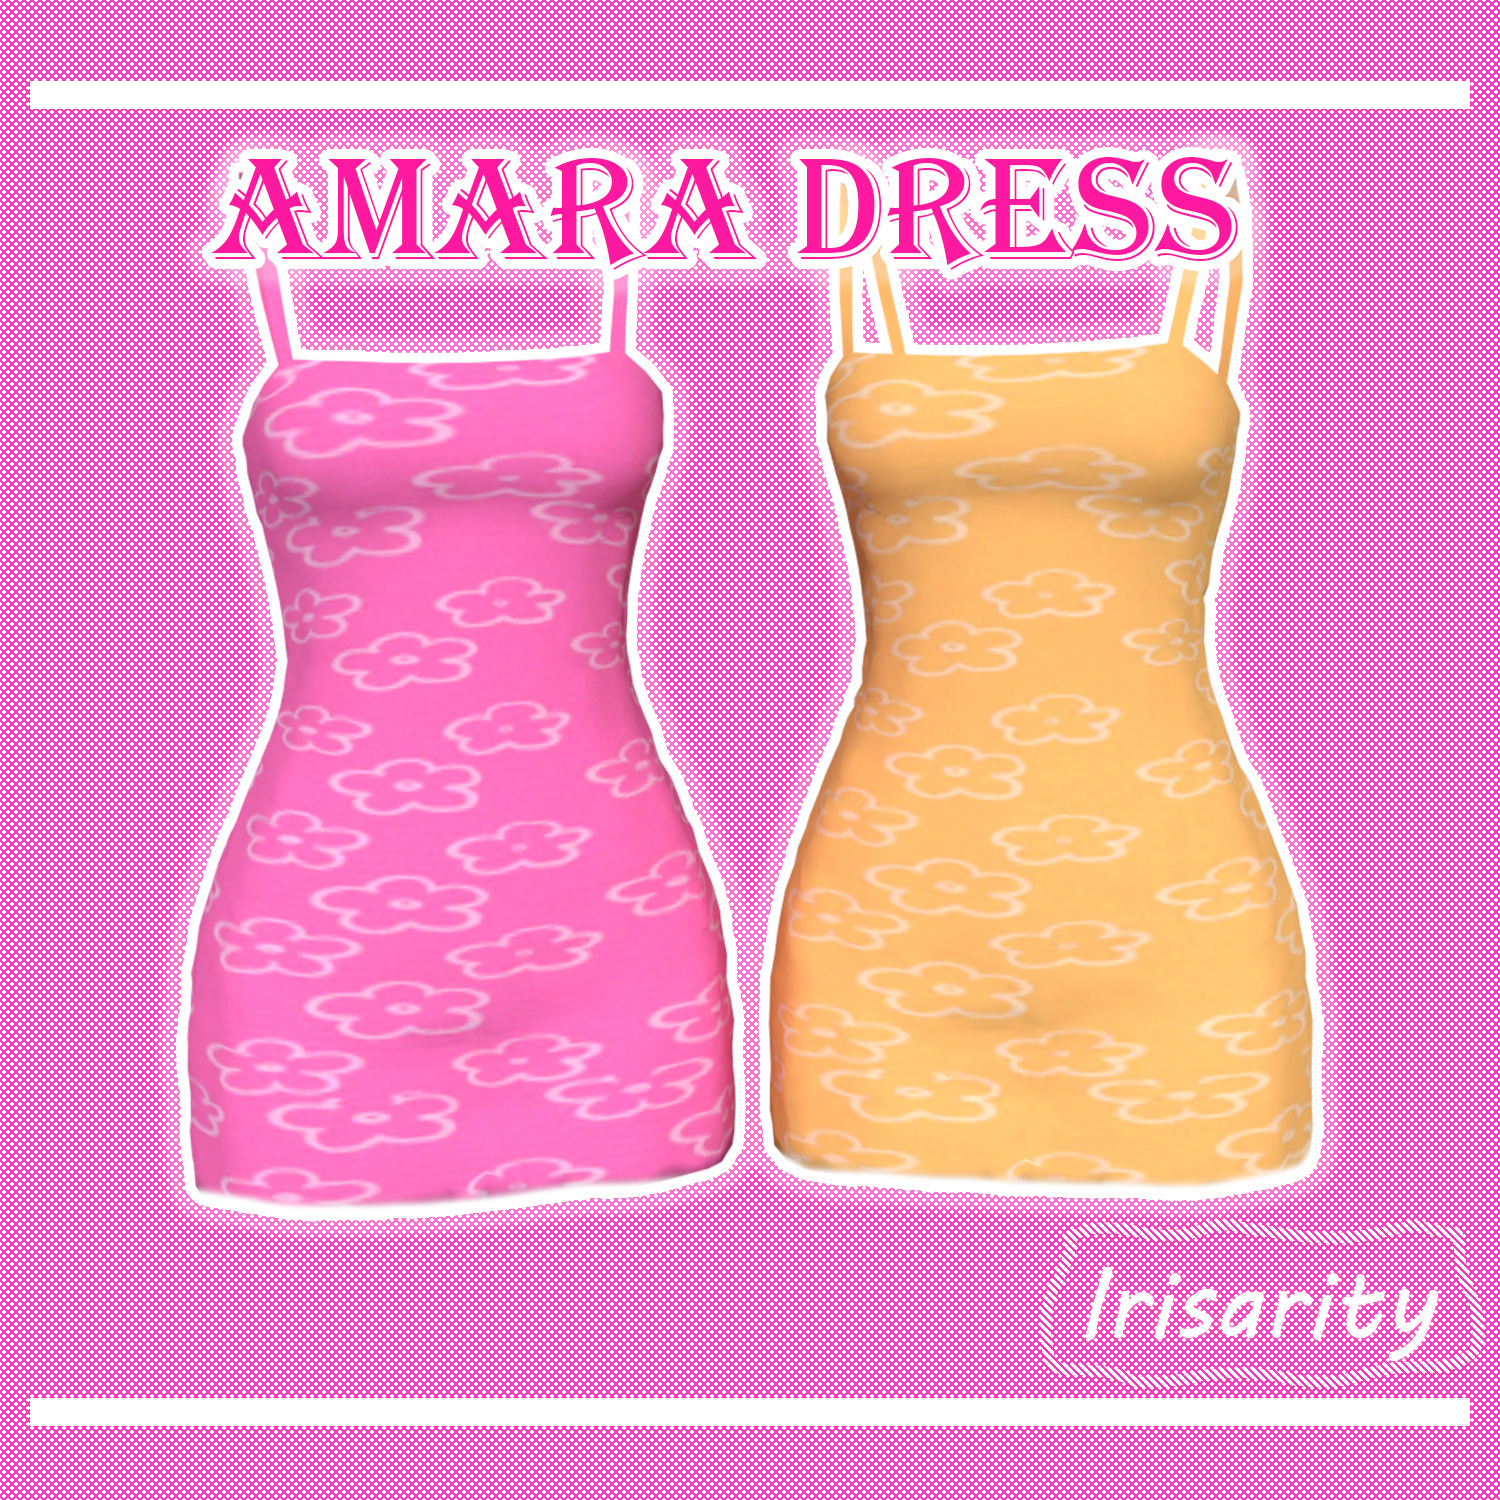 Amara Dress - Clothing  Amara dress, Fashion, Dress